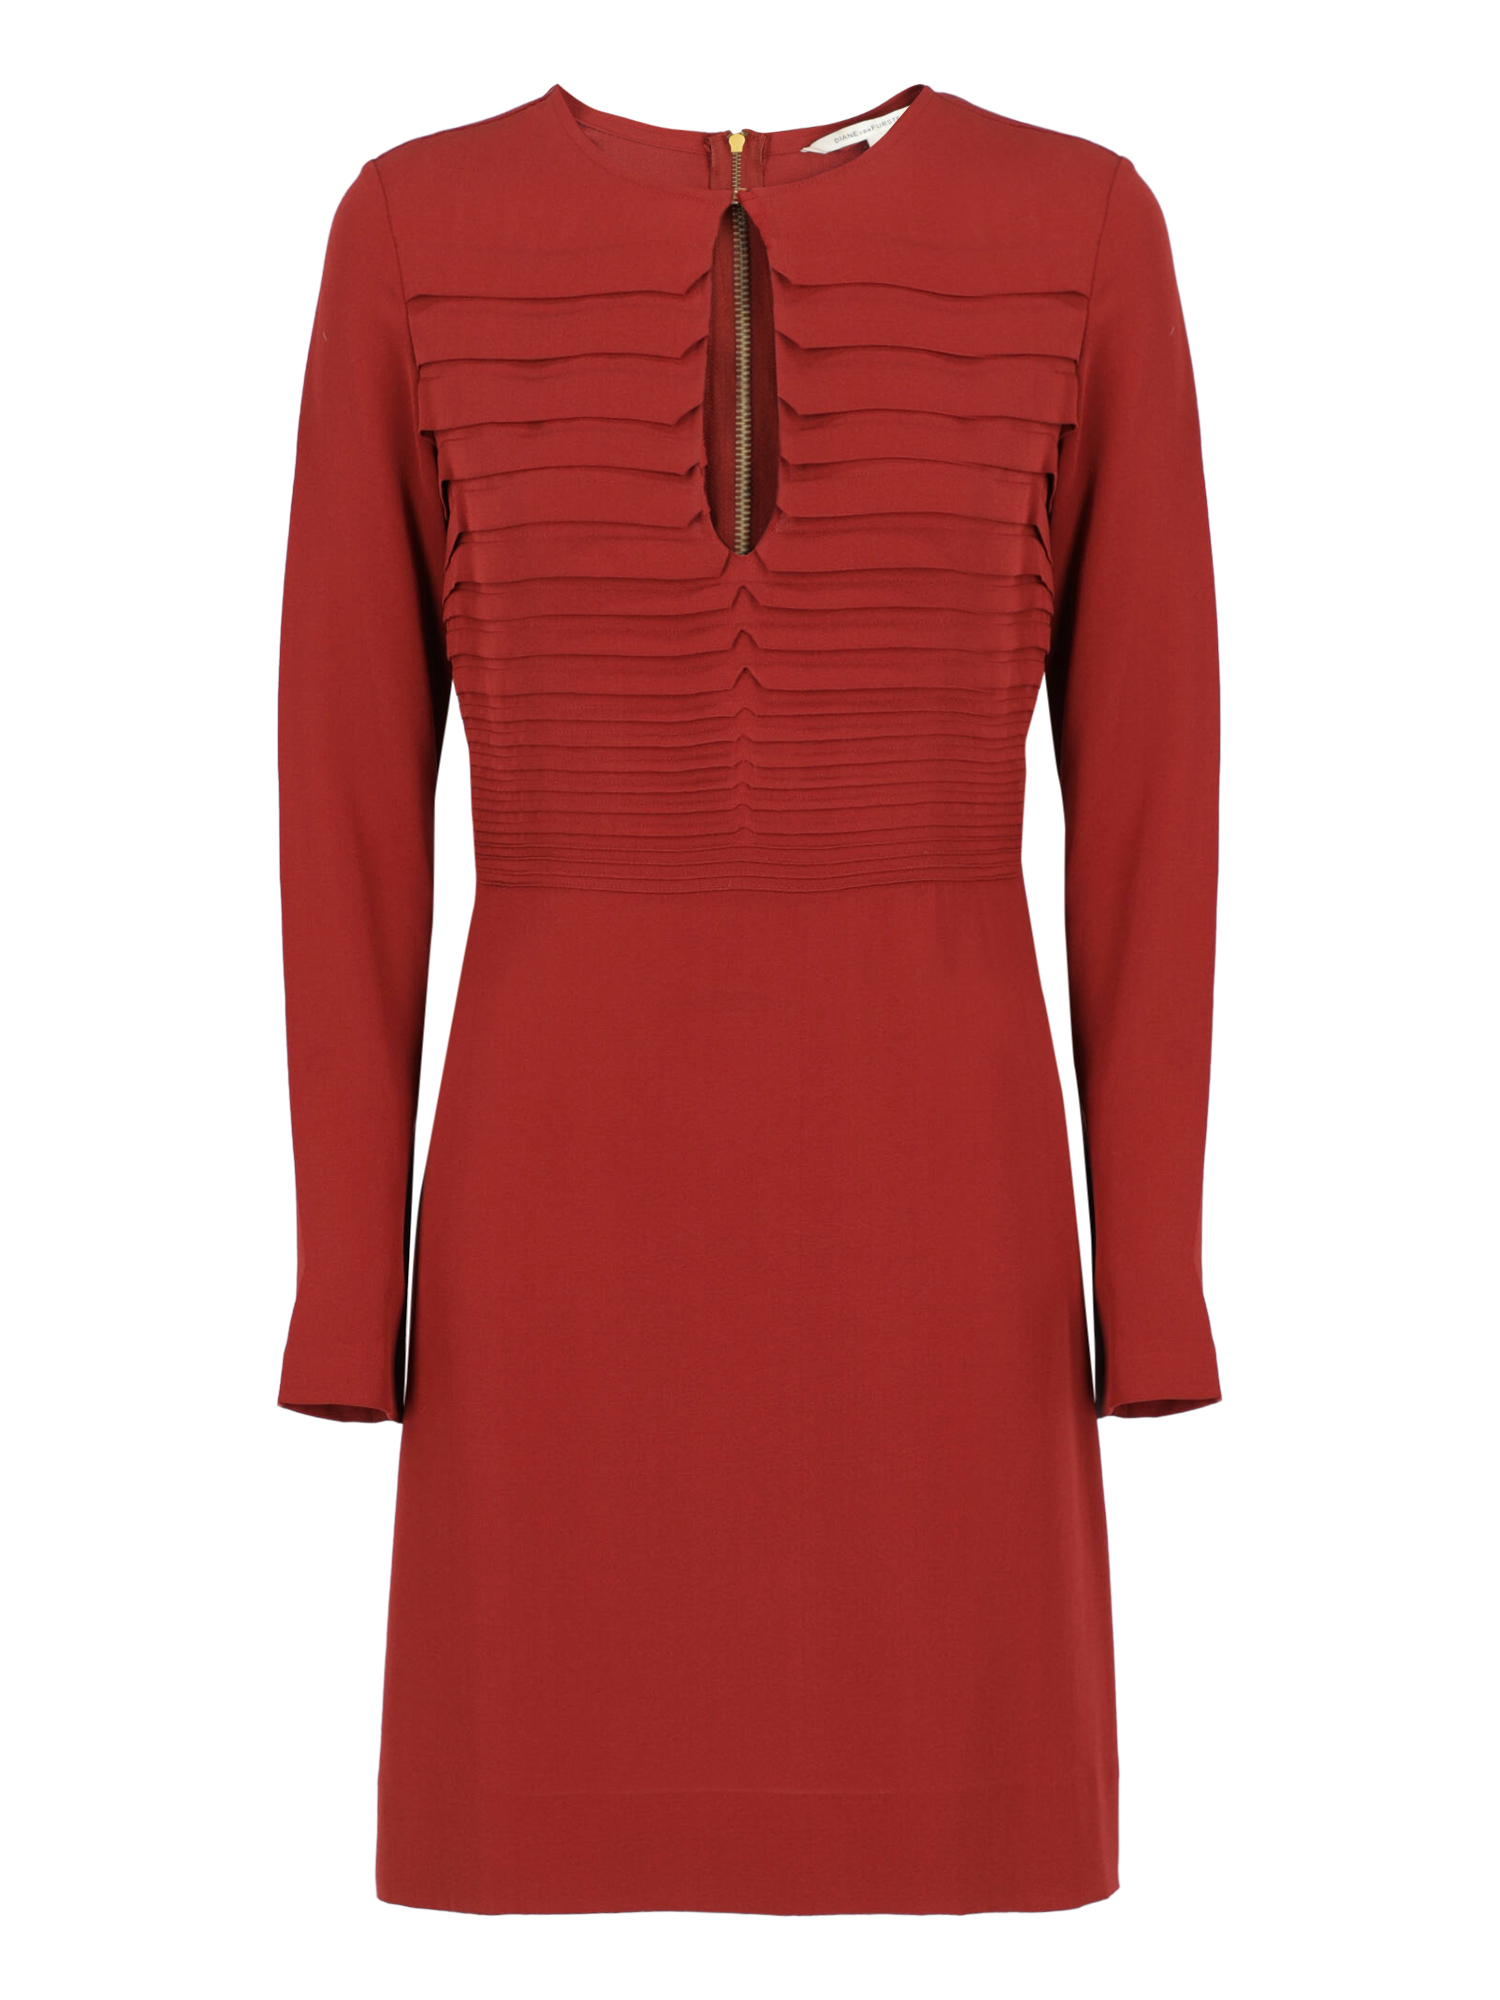 Robes Pour Femme - Diane Von Furstenberg - En Synthetic Fibers Red - Taille:  -